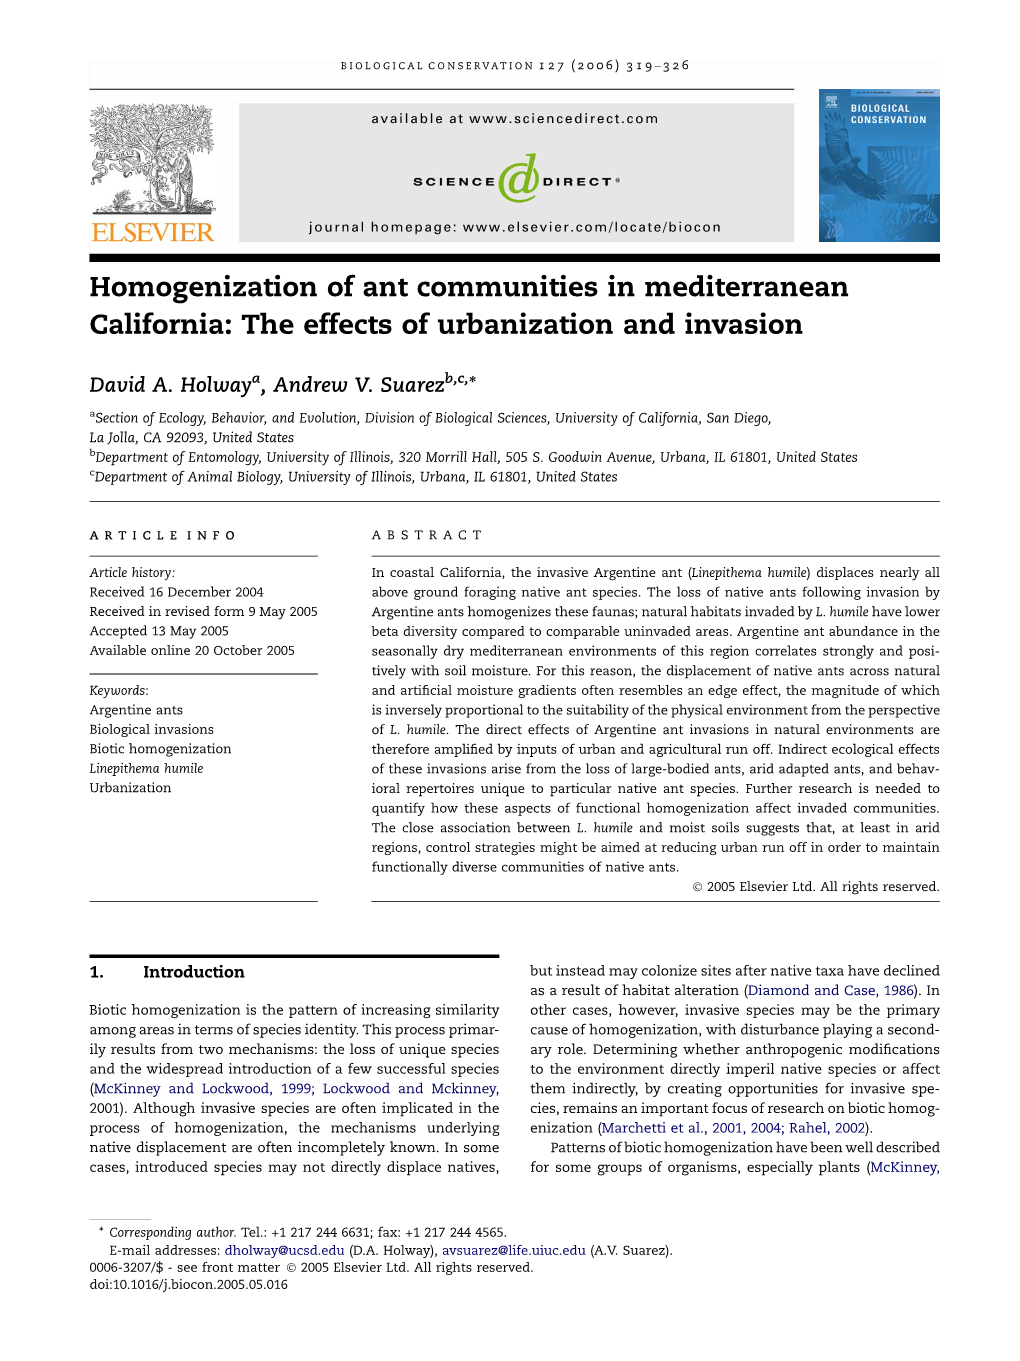 Homogenization of Ant Communities in Mediterranean California: the Effects of Urbanization and Invasion